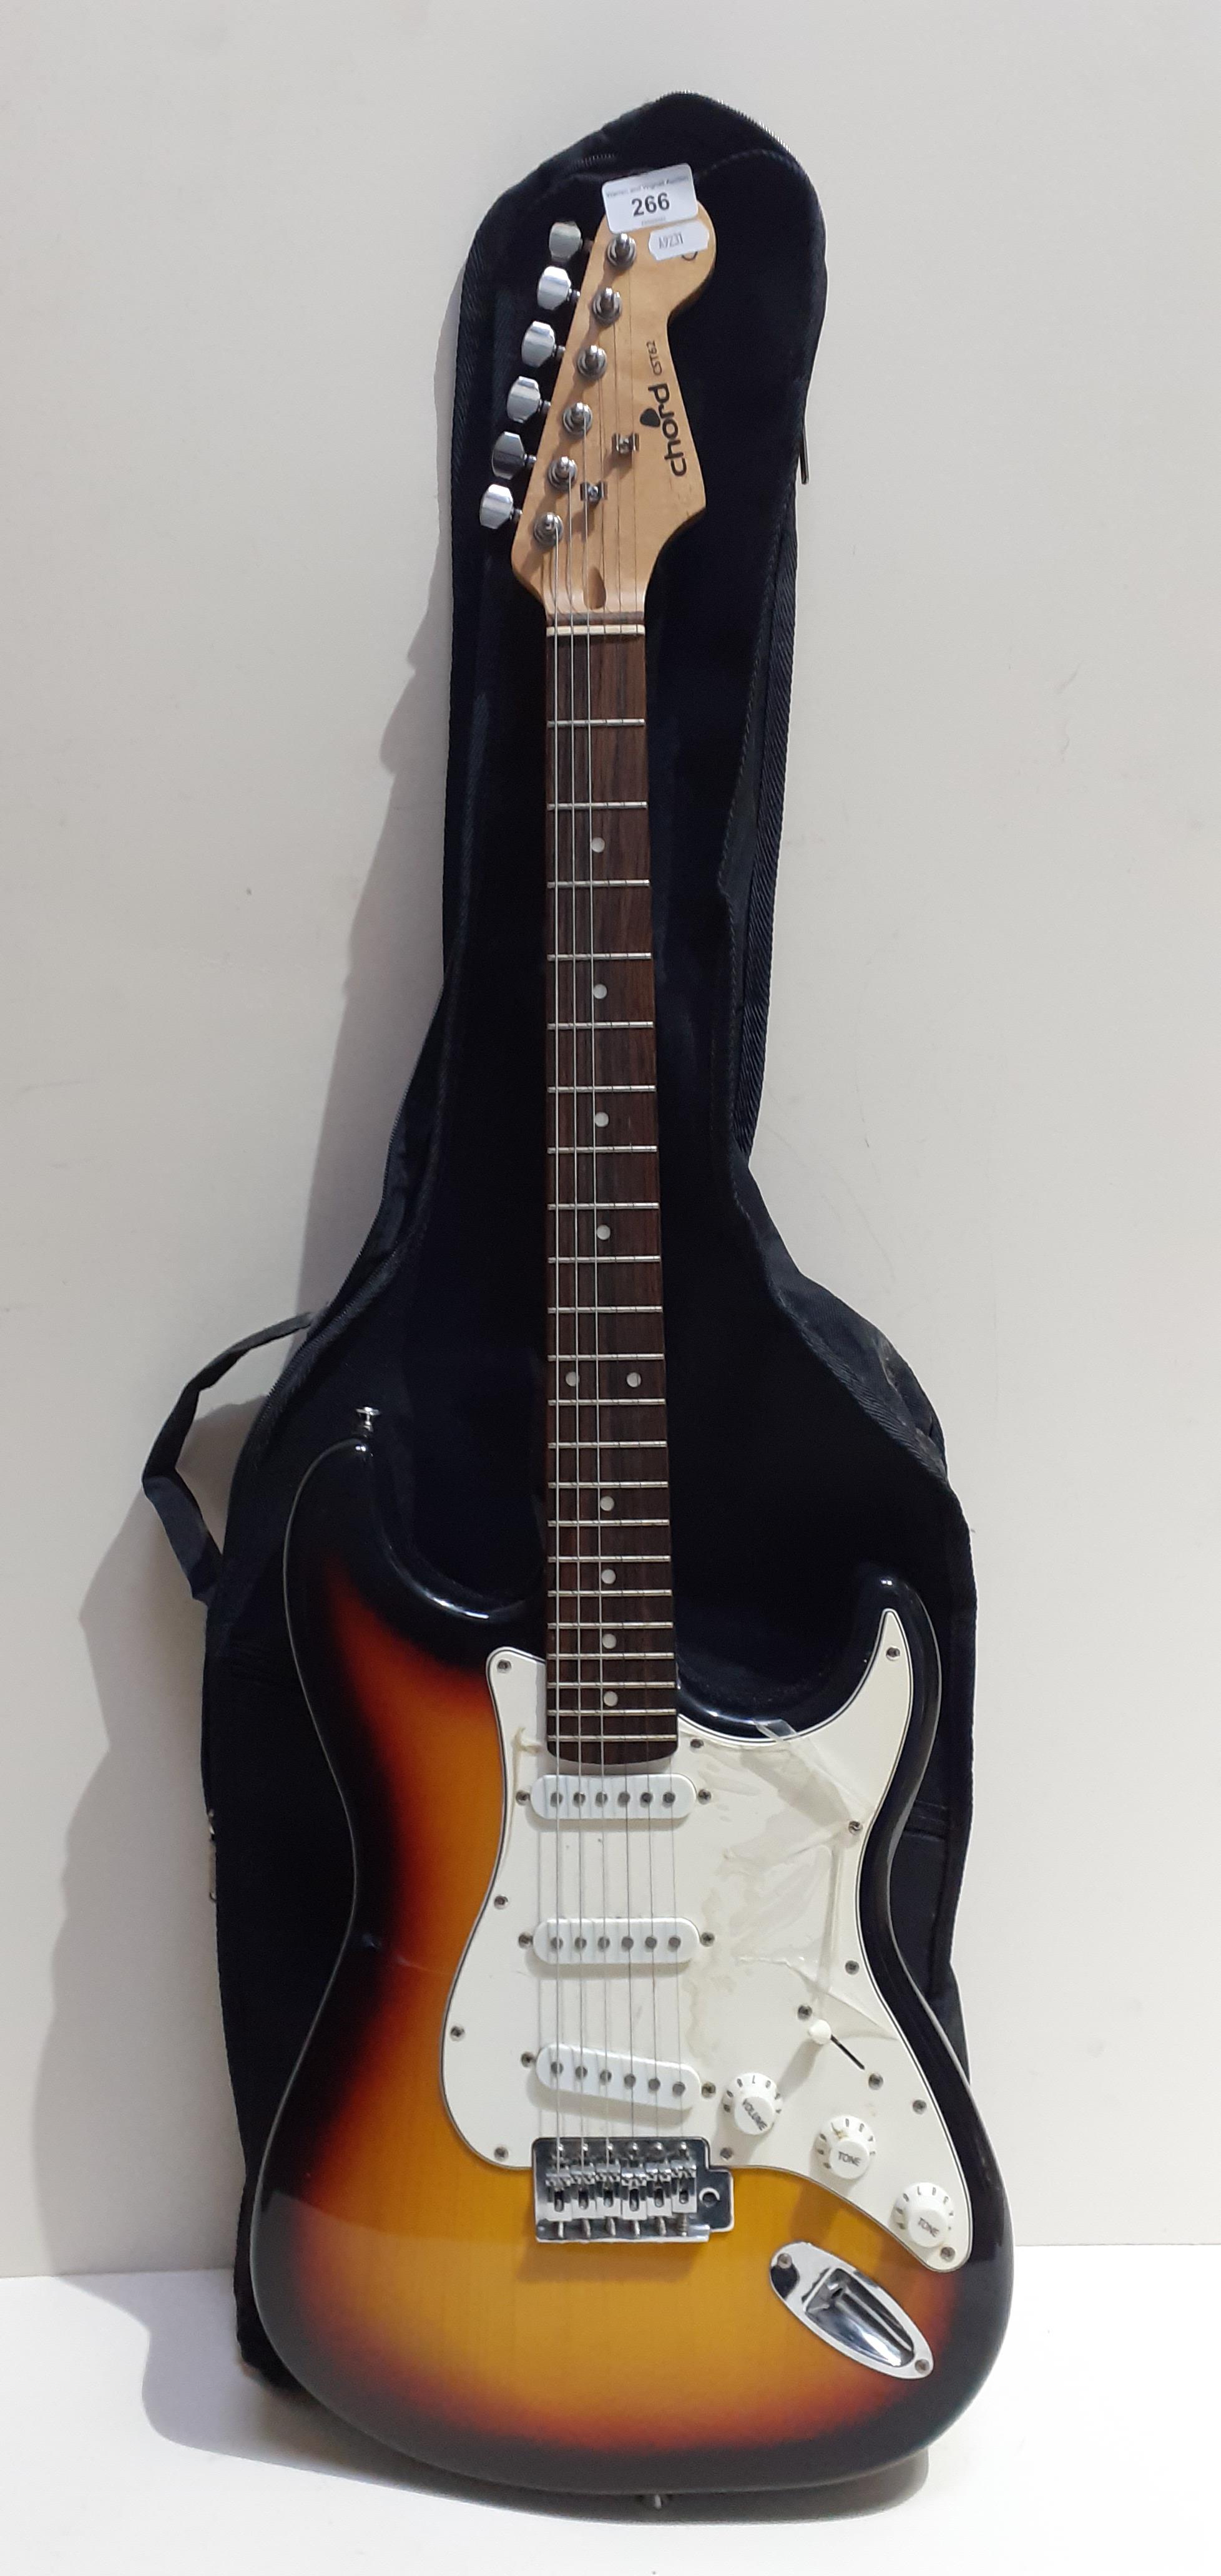 A Chord CST62 electric guitar.